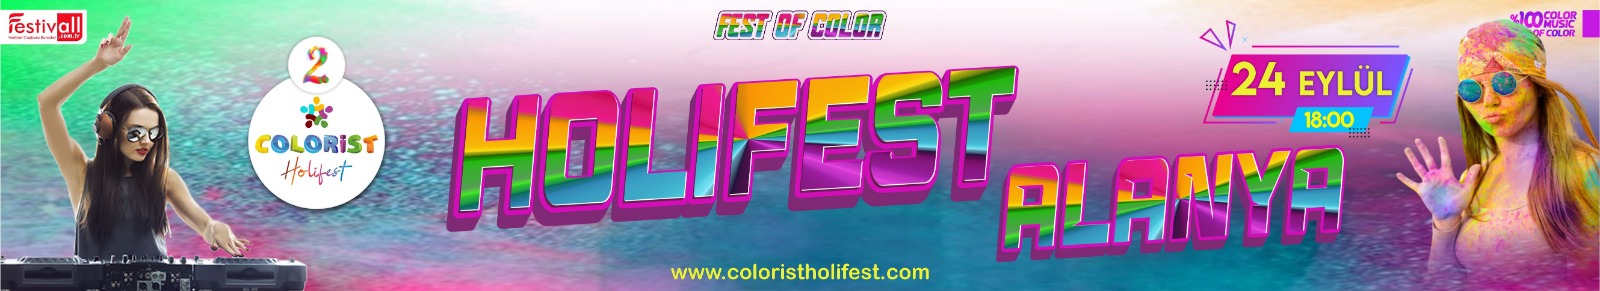 ColoristHolifest